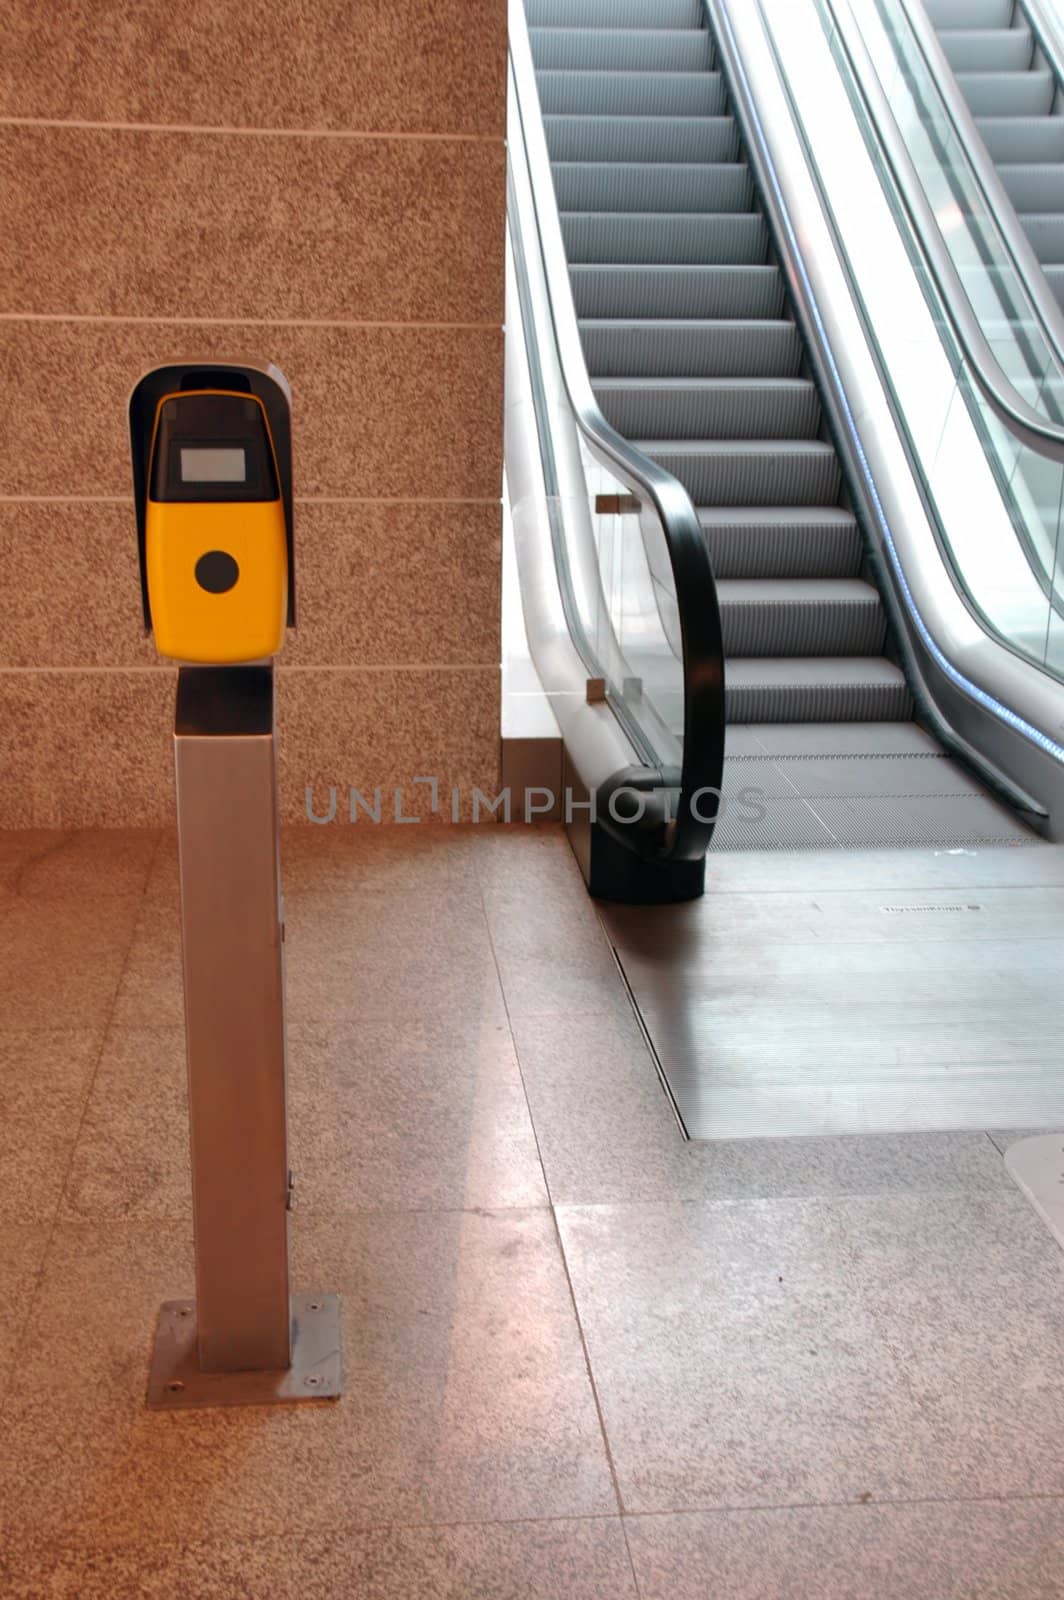 ticket validation machines and escalator